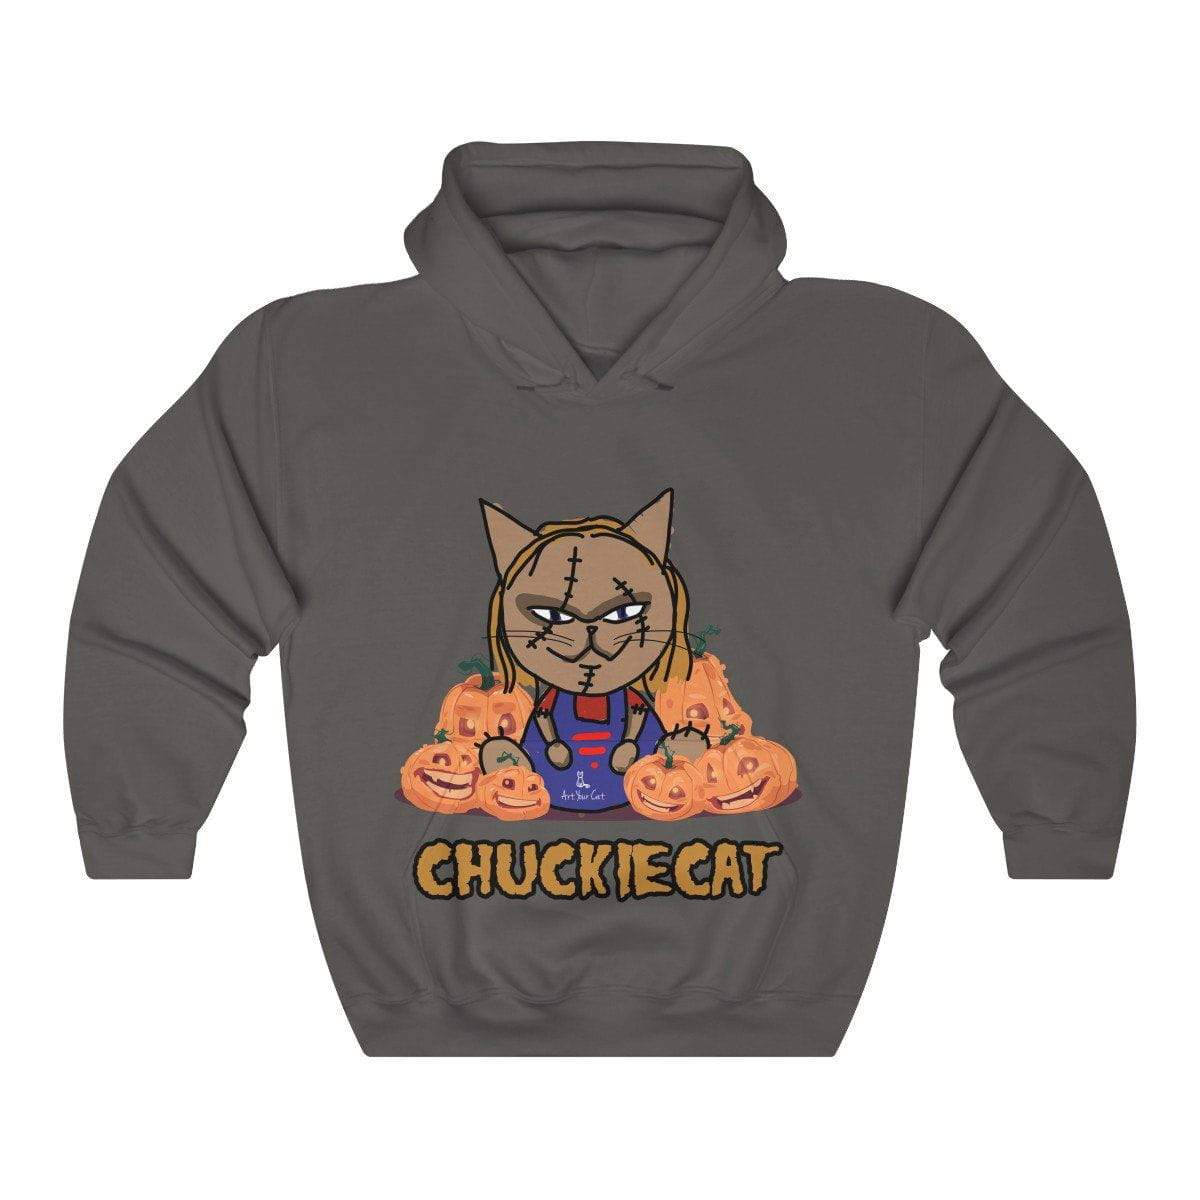 Art Your Cat Chuckiecat - Hoodie